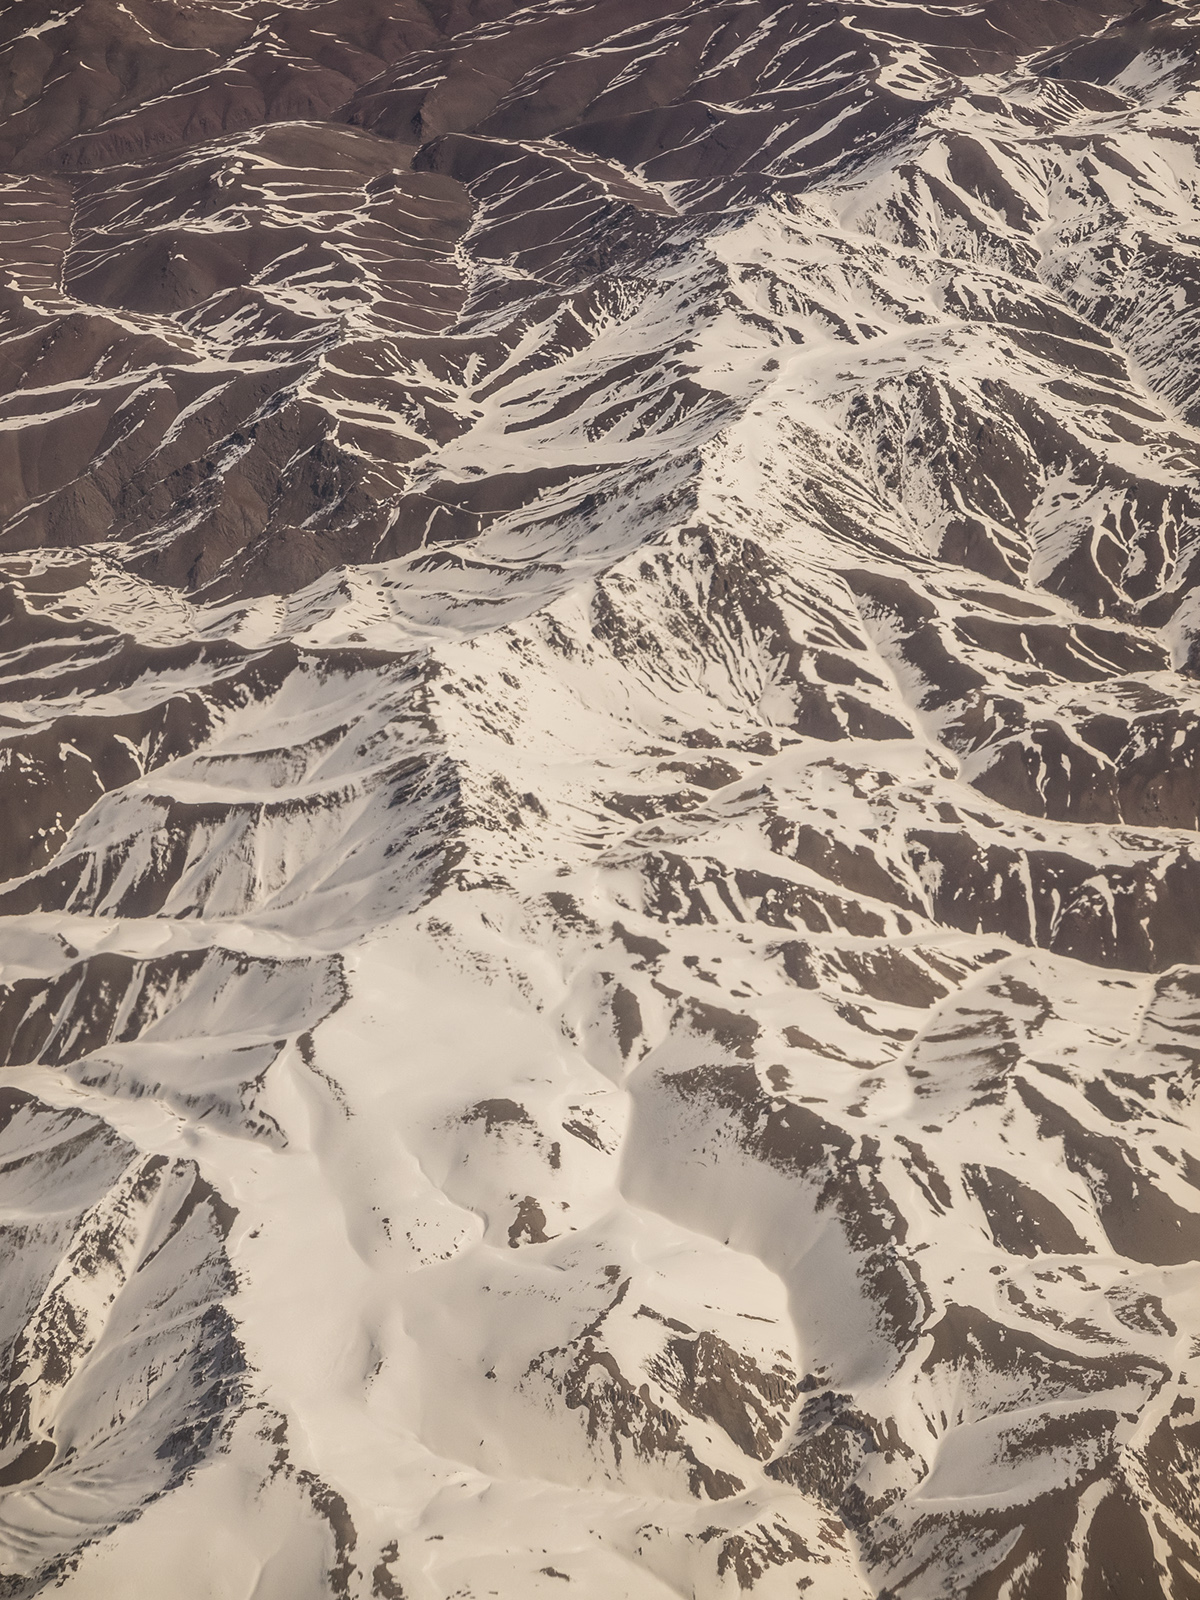 Aerial mountain zagros Iran plane MORNING light colors snow rocks peak minimalistic places Travel view